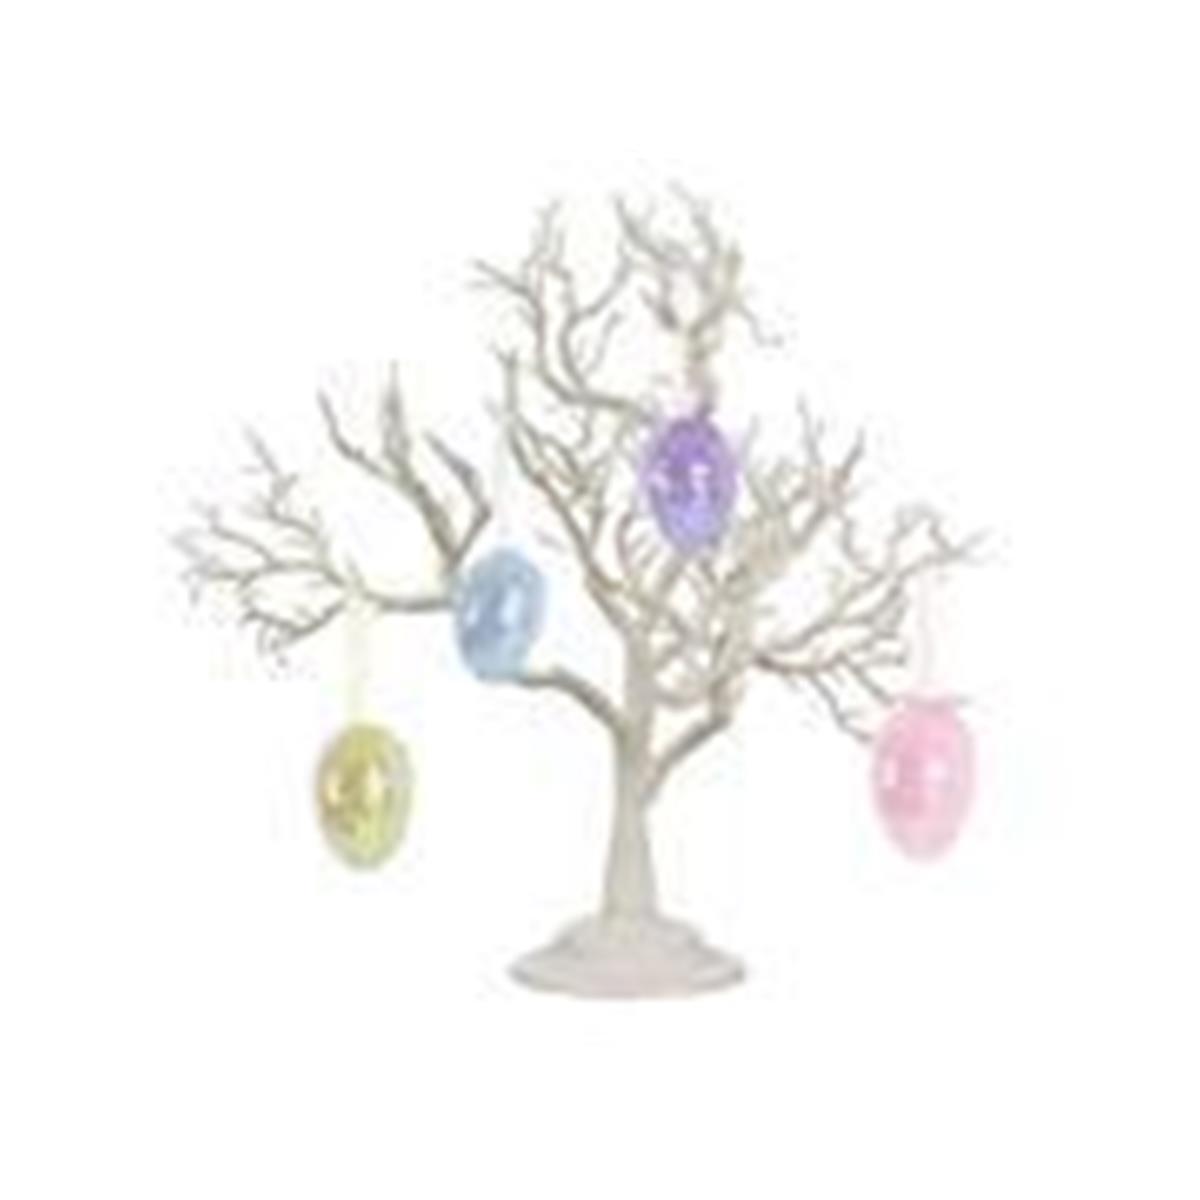 Picture of Forum Novelties 309727 Easter Decorative Sequin Eggs - 4 Count